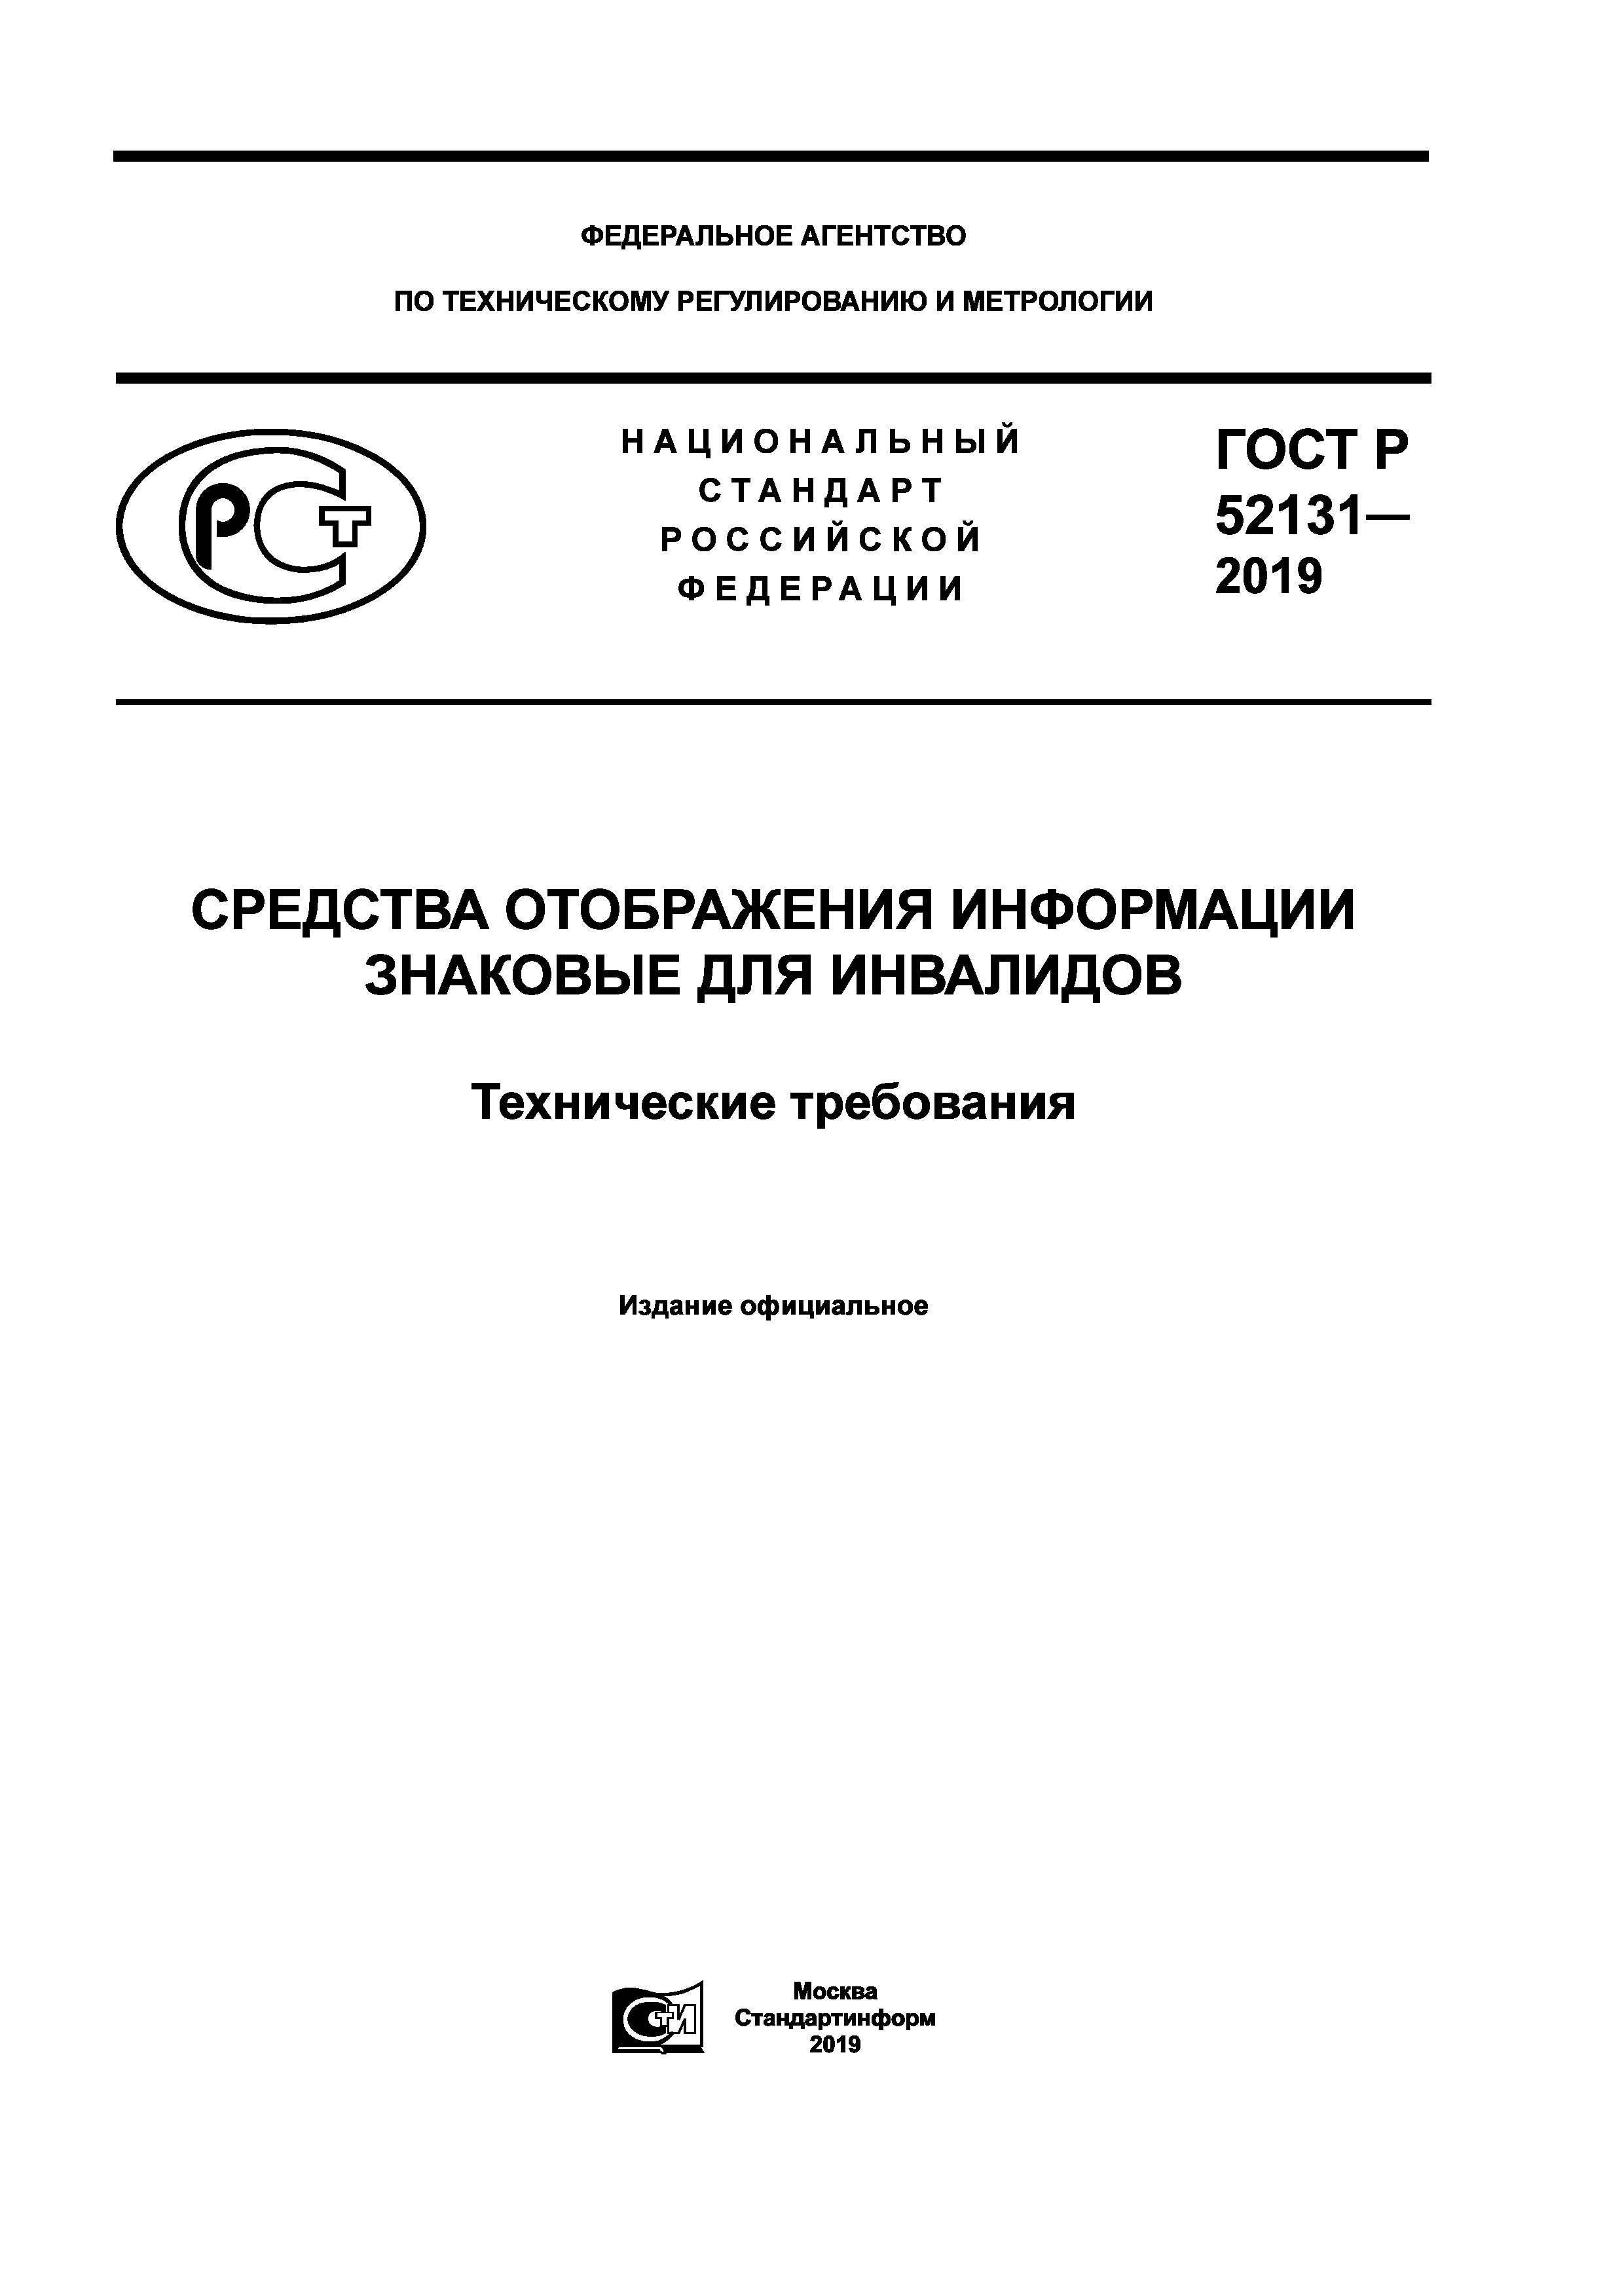 ГОСТ Р 52131-2019